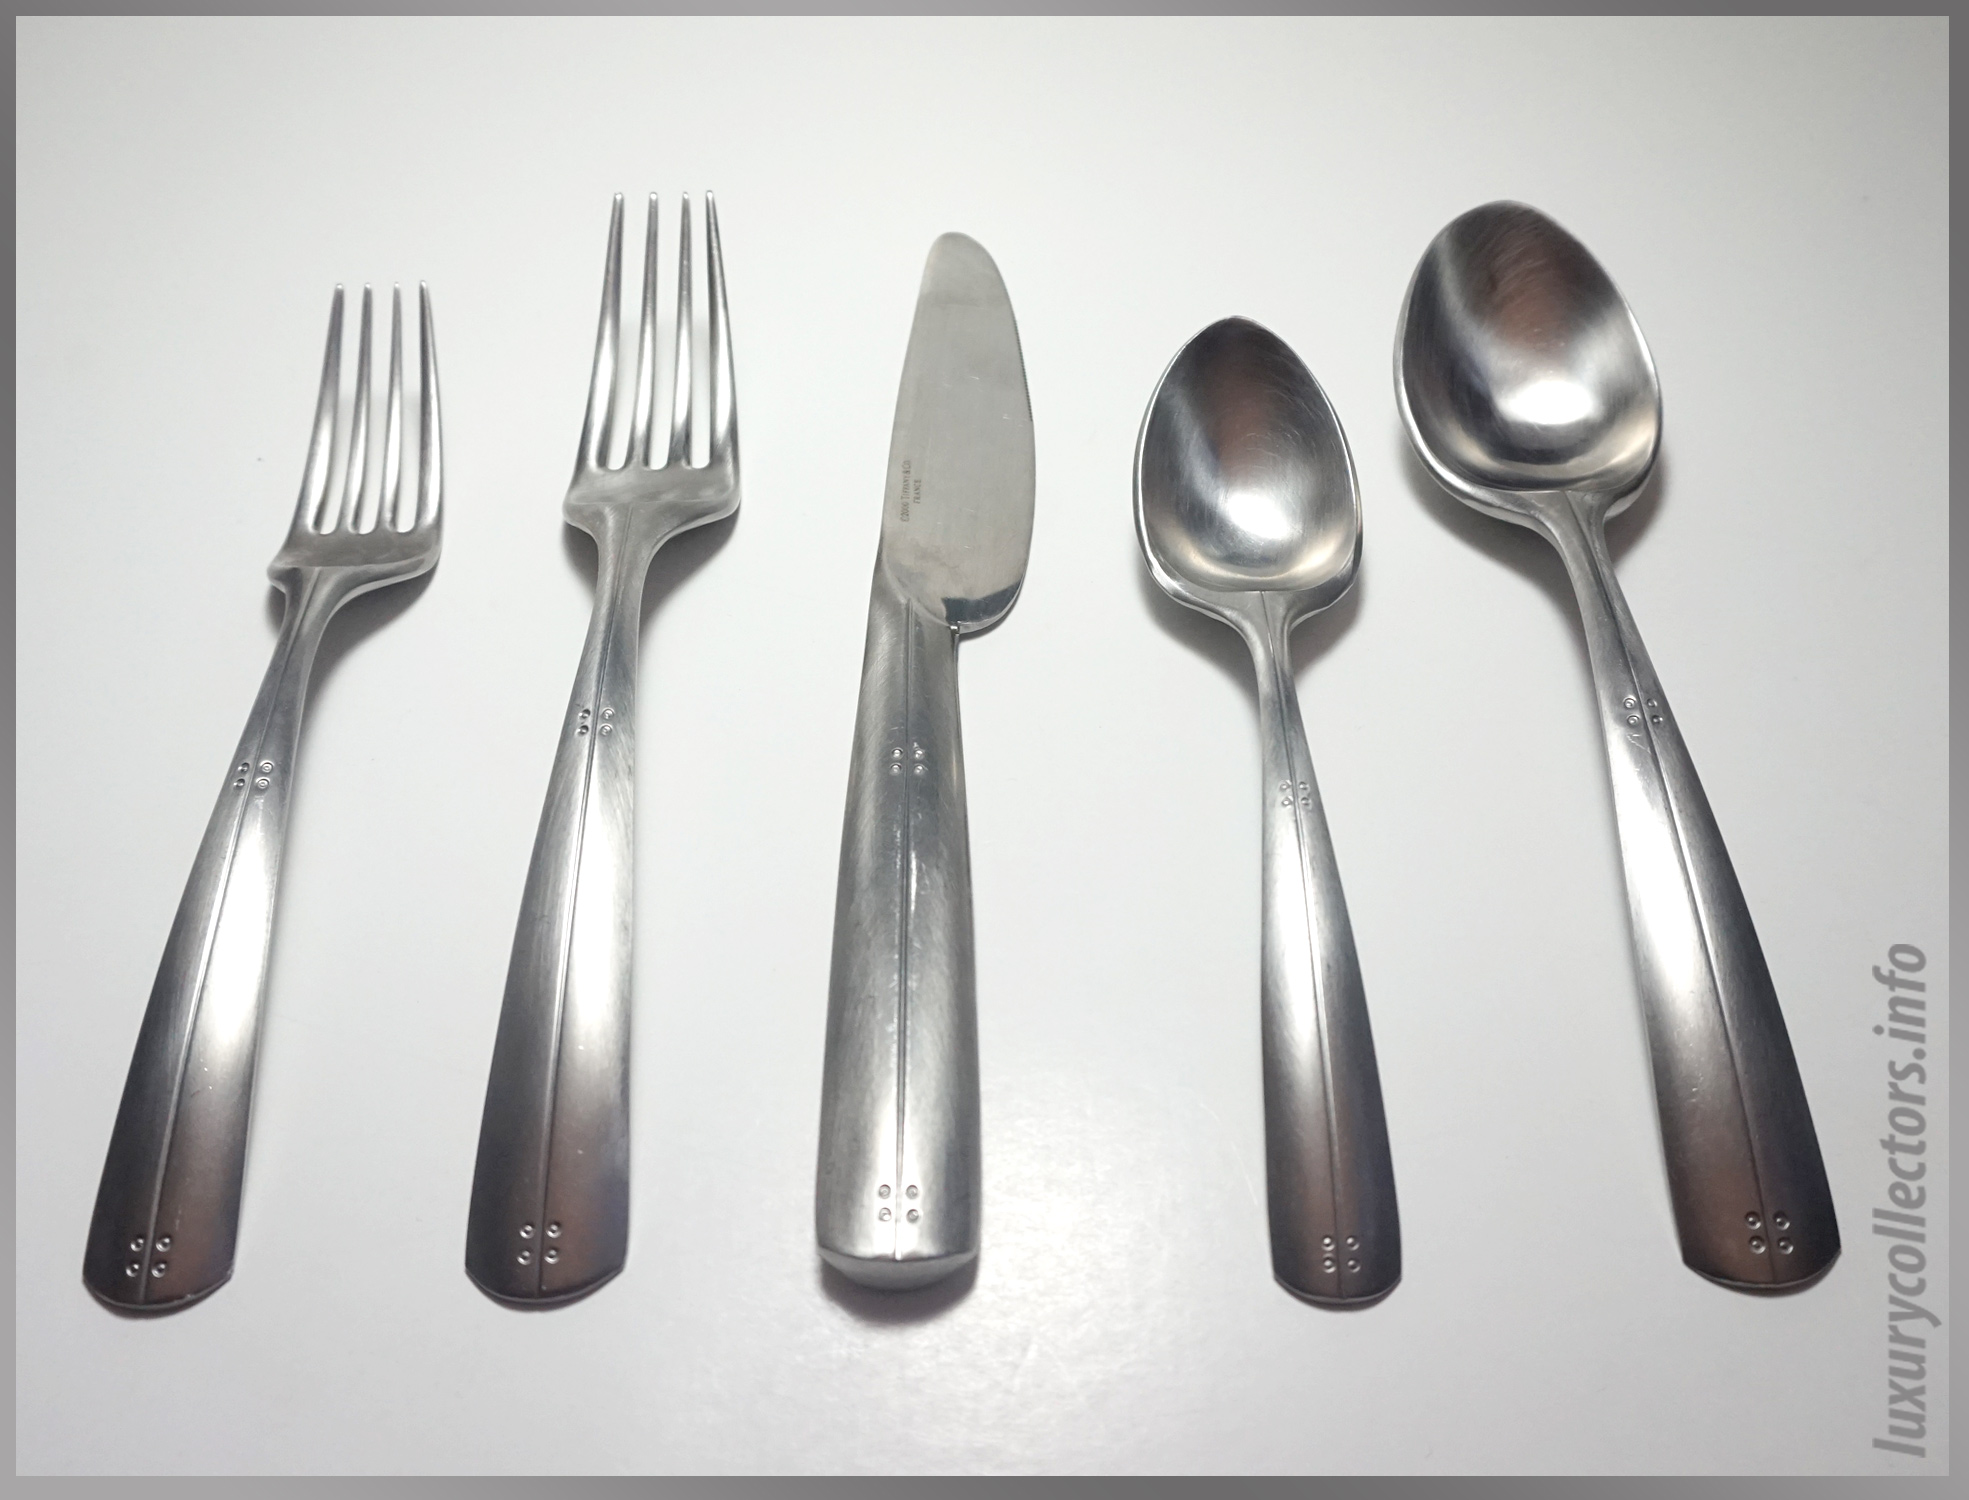 Streamerica Tiffany & Co. Flatware Place Setting Cutlery Stainless Steel Fork Knife Spoon Tableware 2000